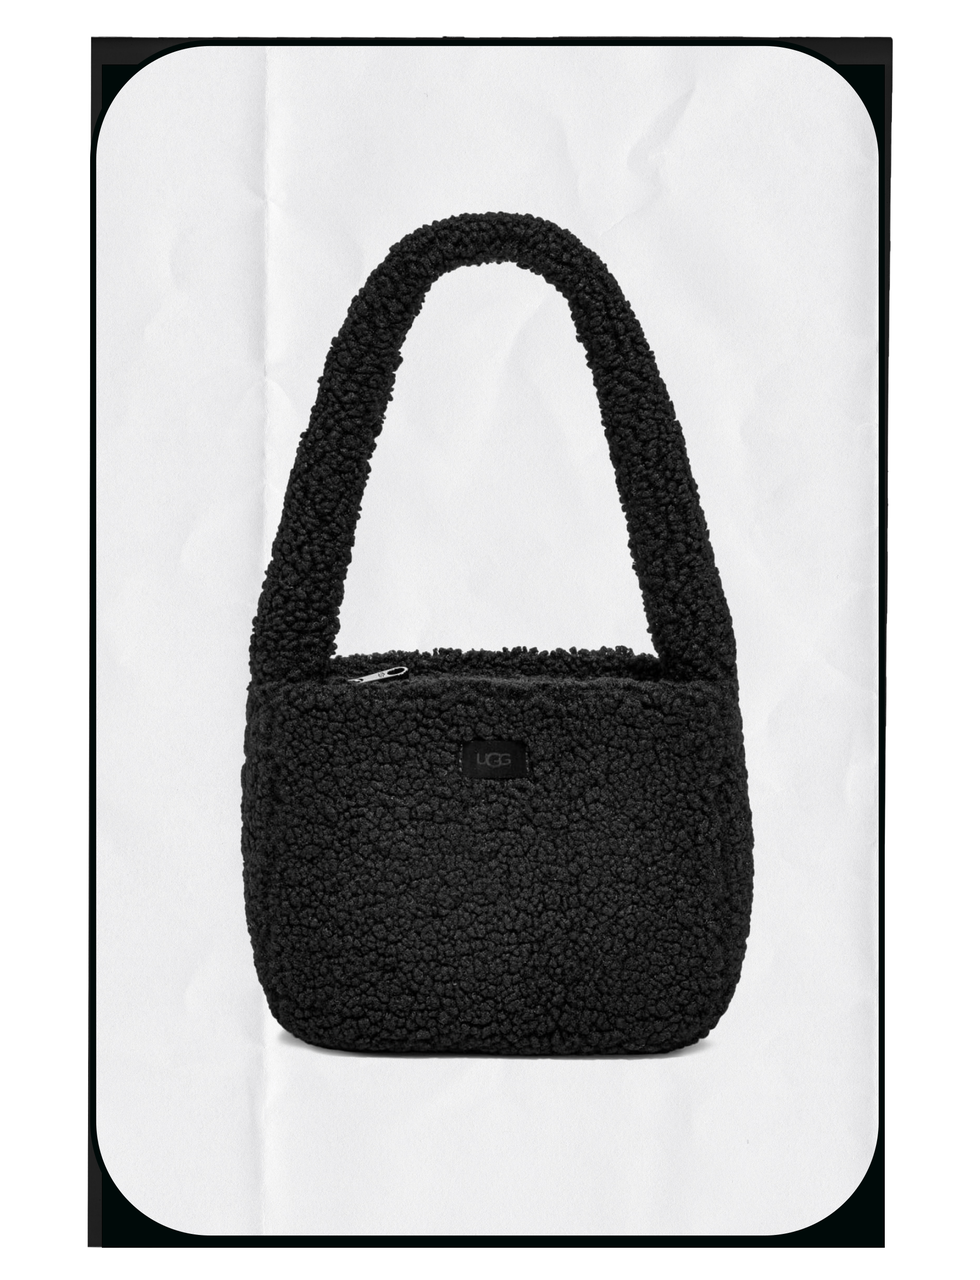 chanel white and black handbag new